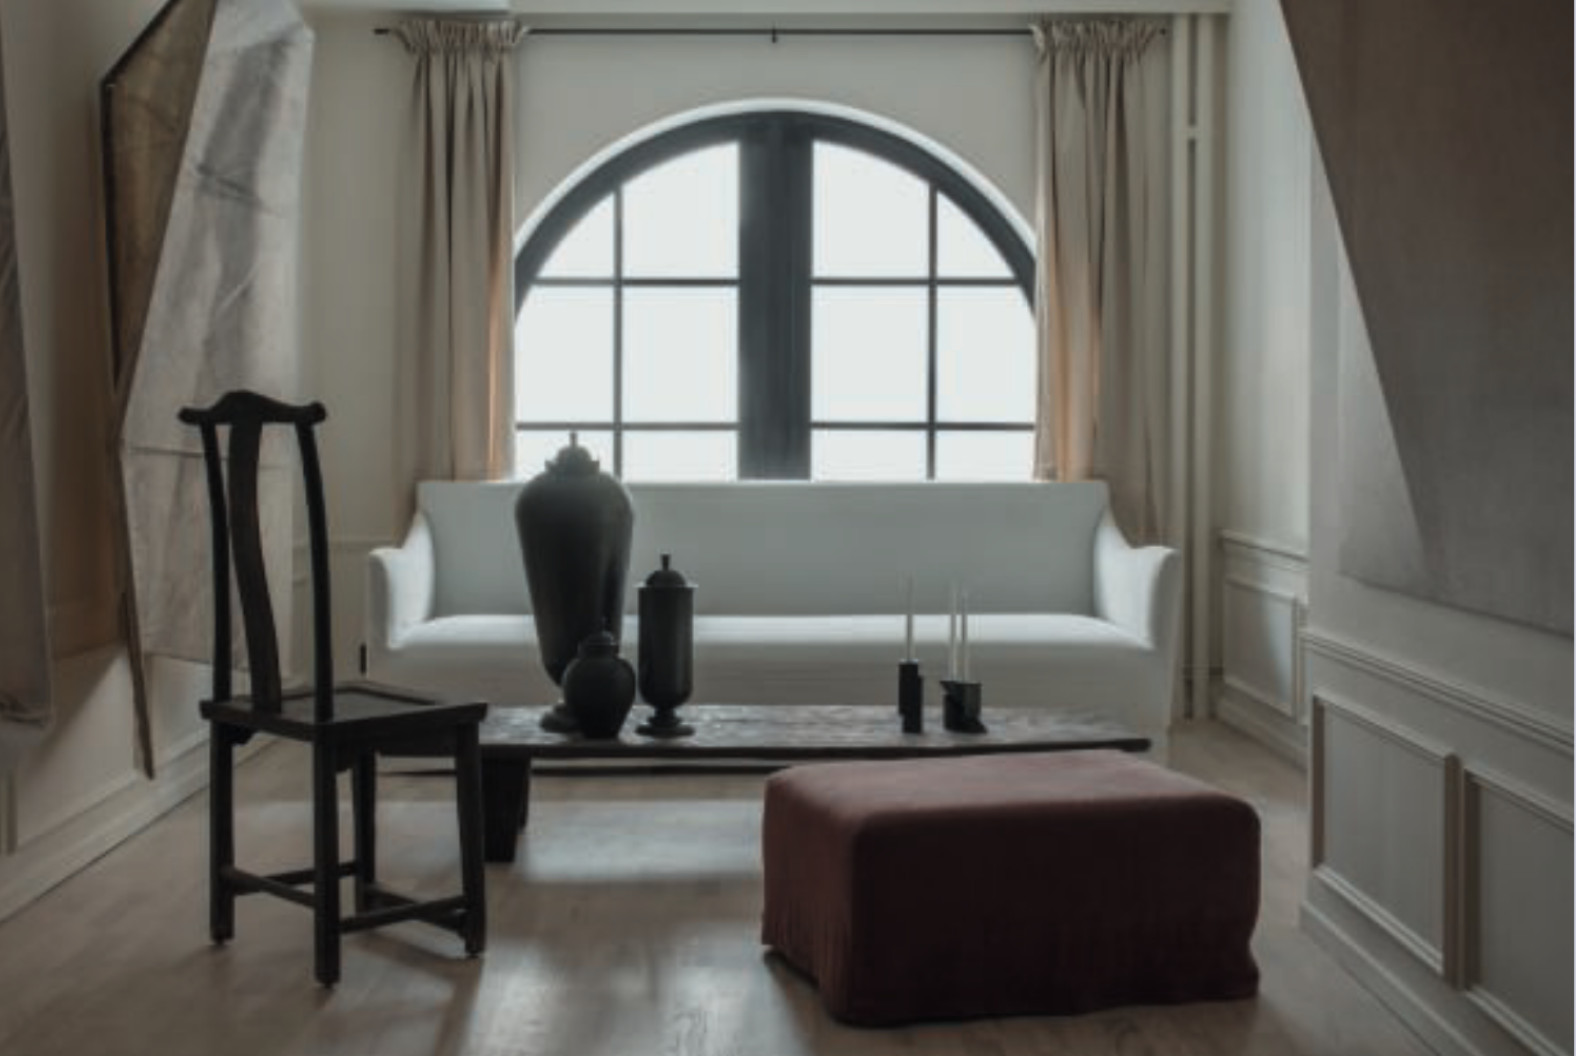 Torsgatan. Private Residence/Showroom, Living Room Stockholm, Sweden 2019